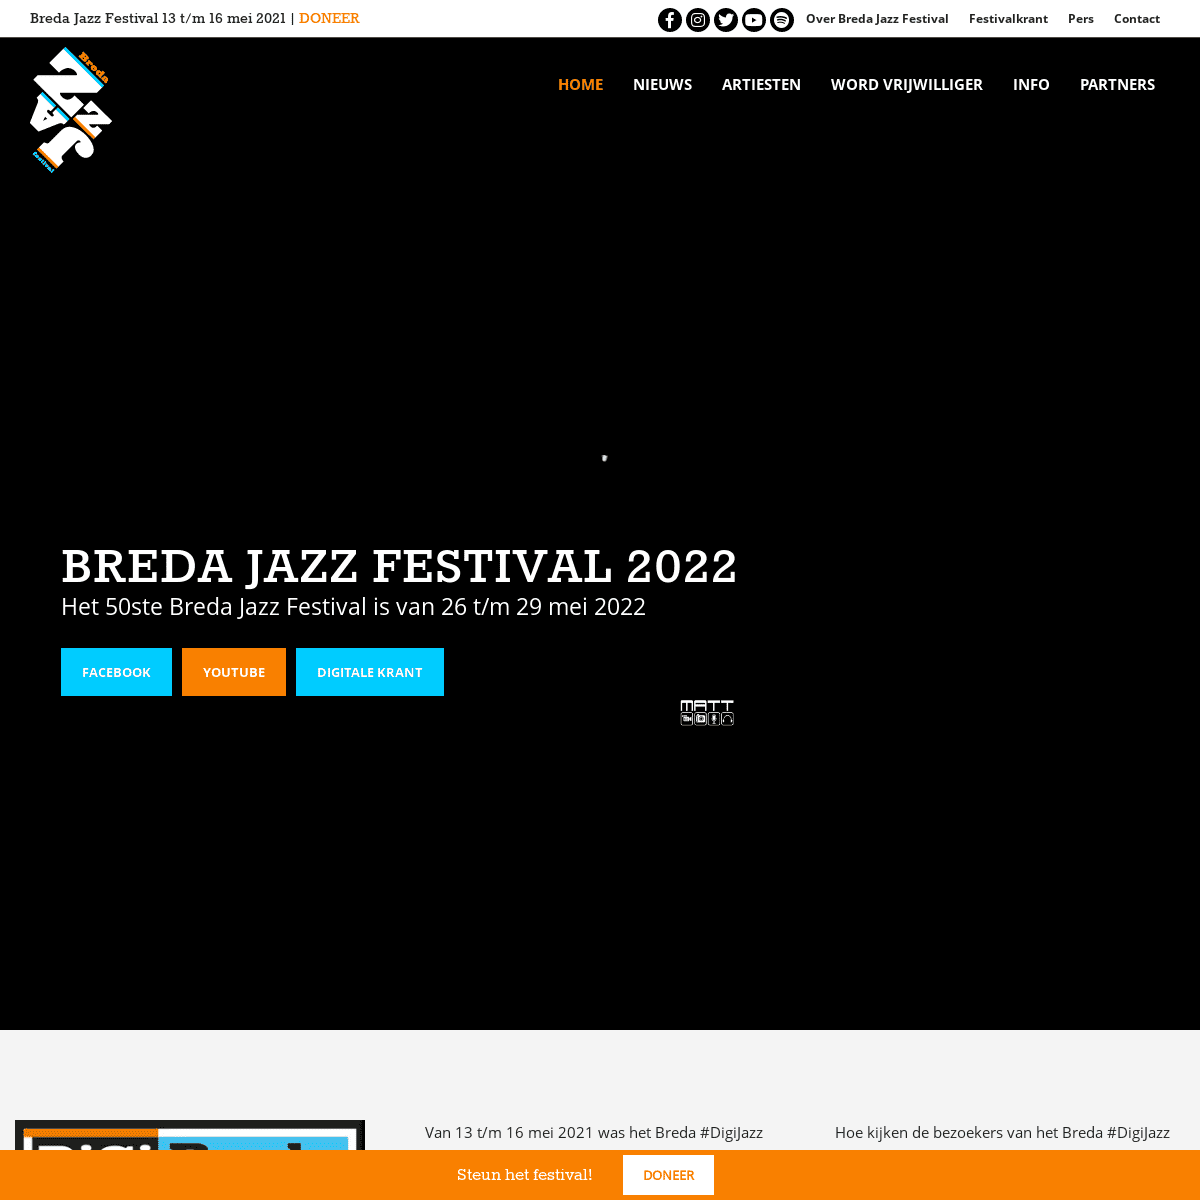 A complete backup of https://bredajazzfestival.nl